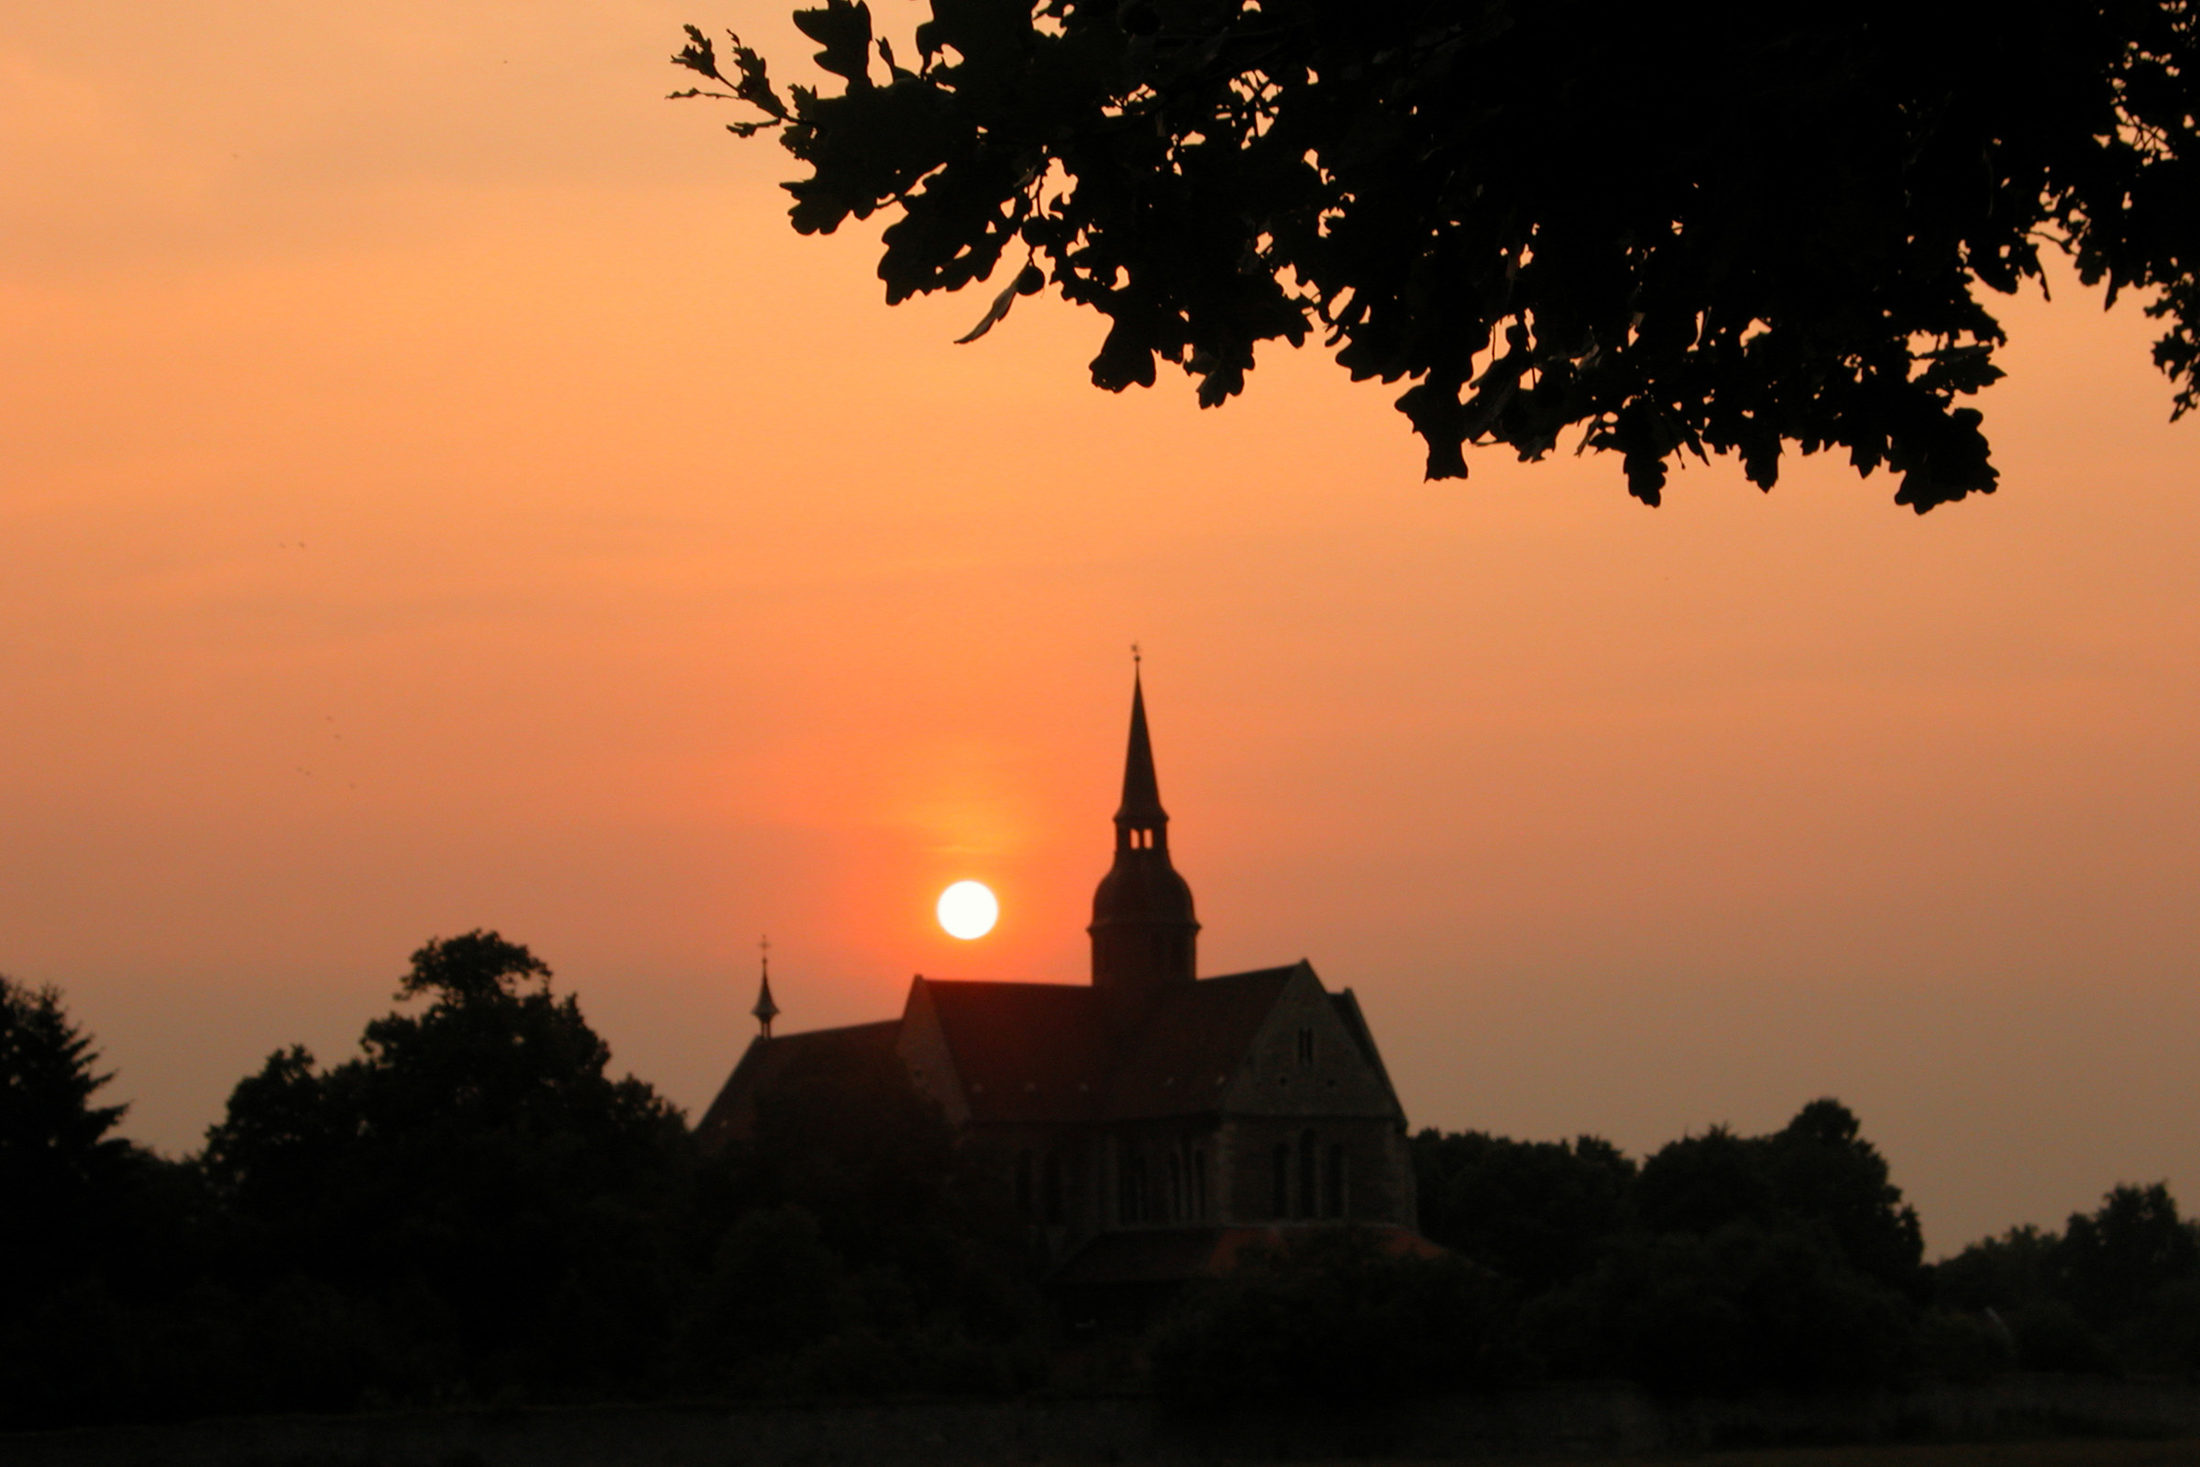 Klosterkirche Riddagshausen (Zoom on click)